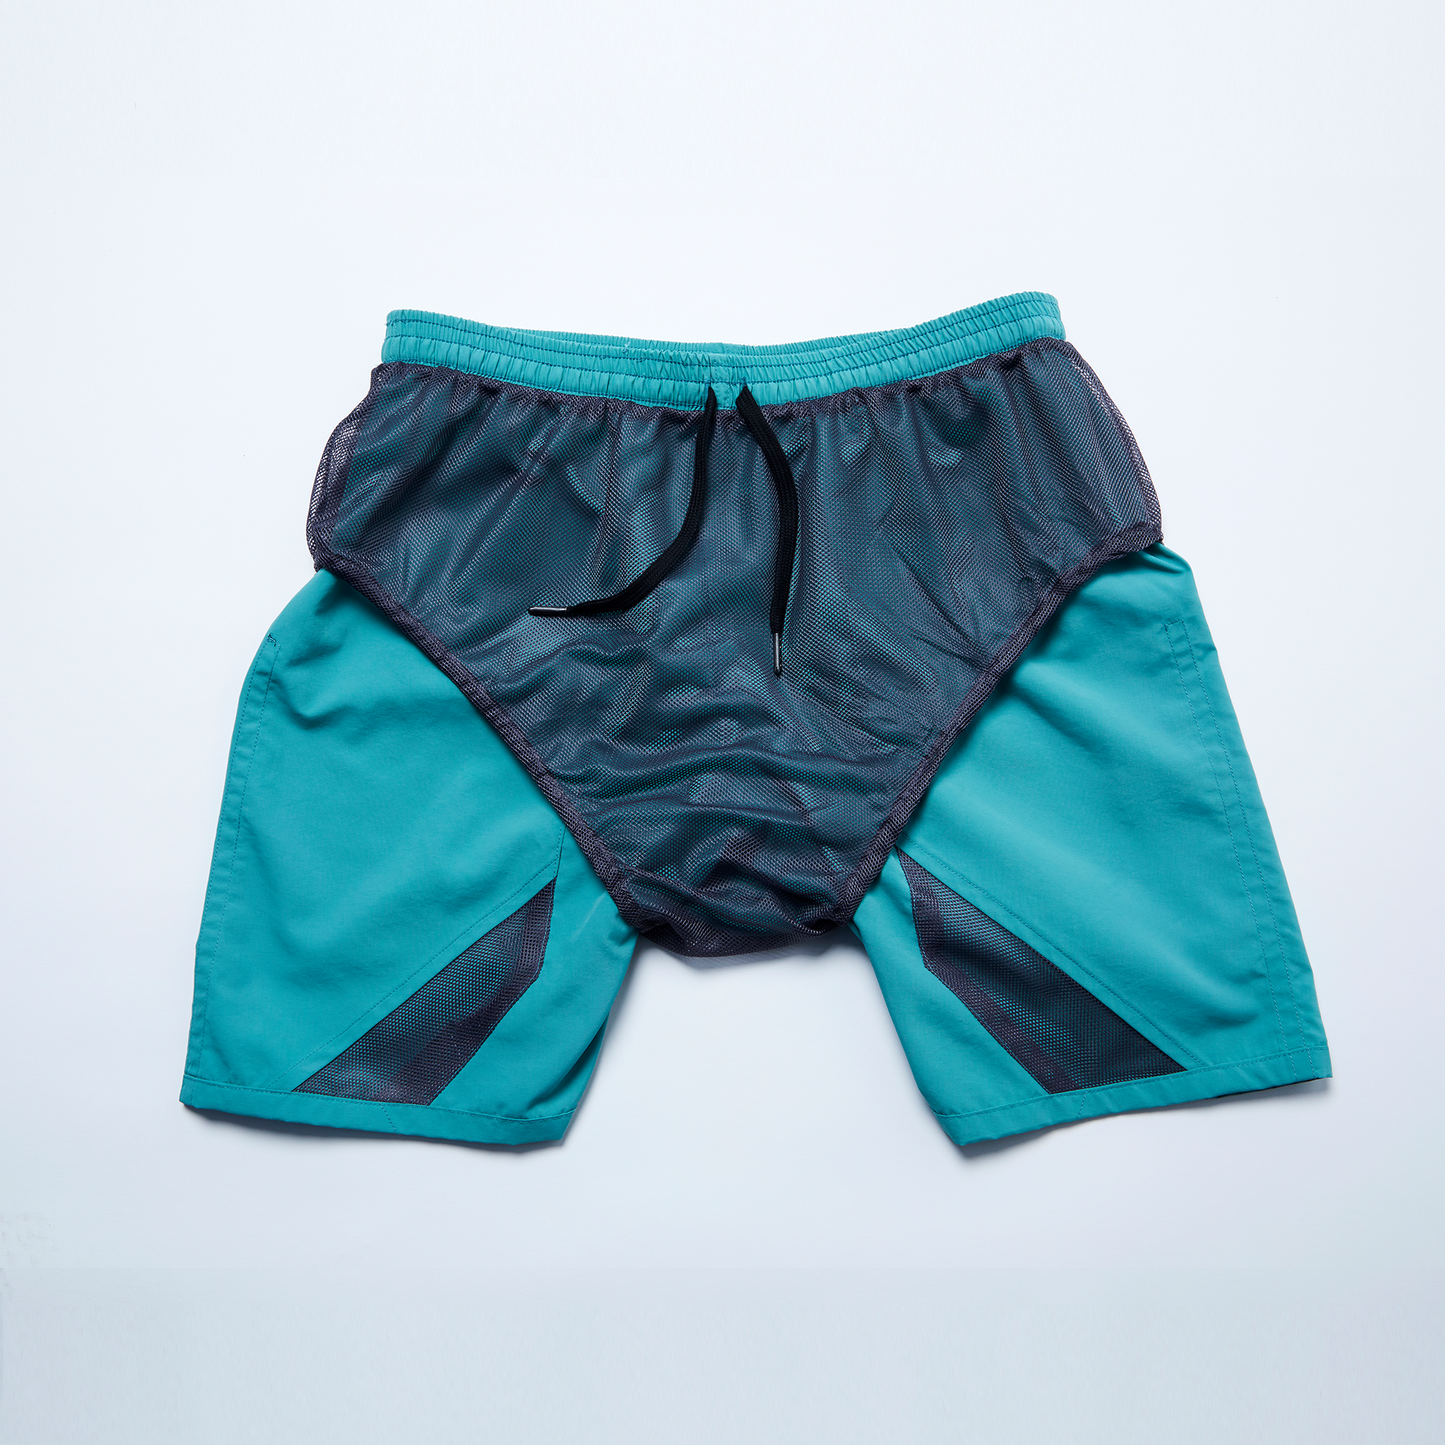 Uncoated Swim Short Pants (MINT)